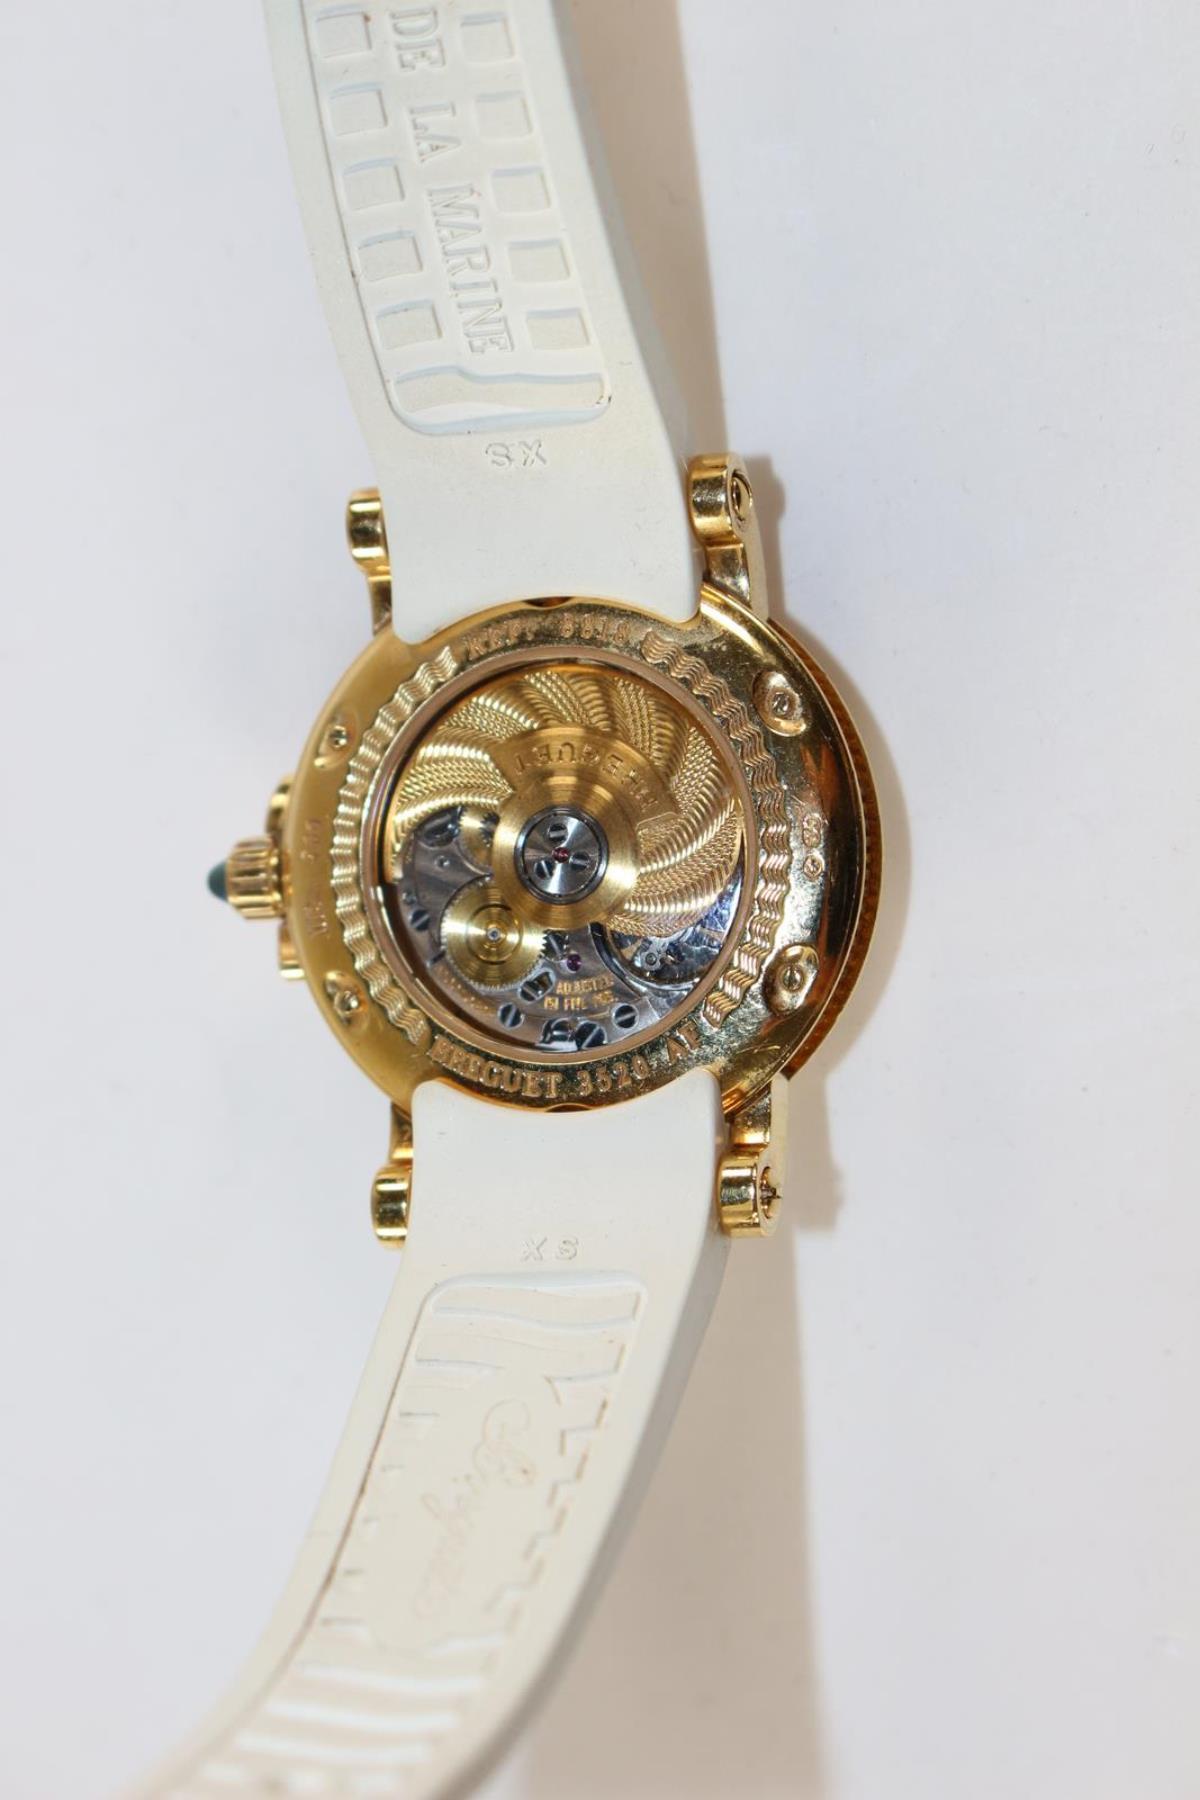 Breguet ladies' wristwatch. - Image 5 of 7